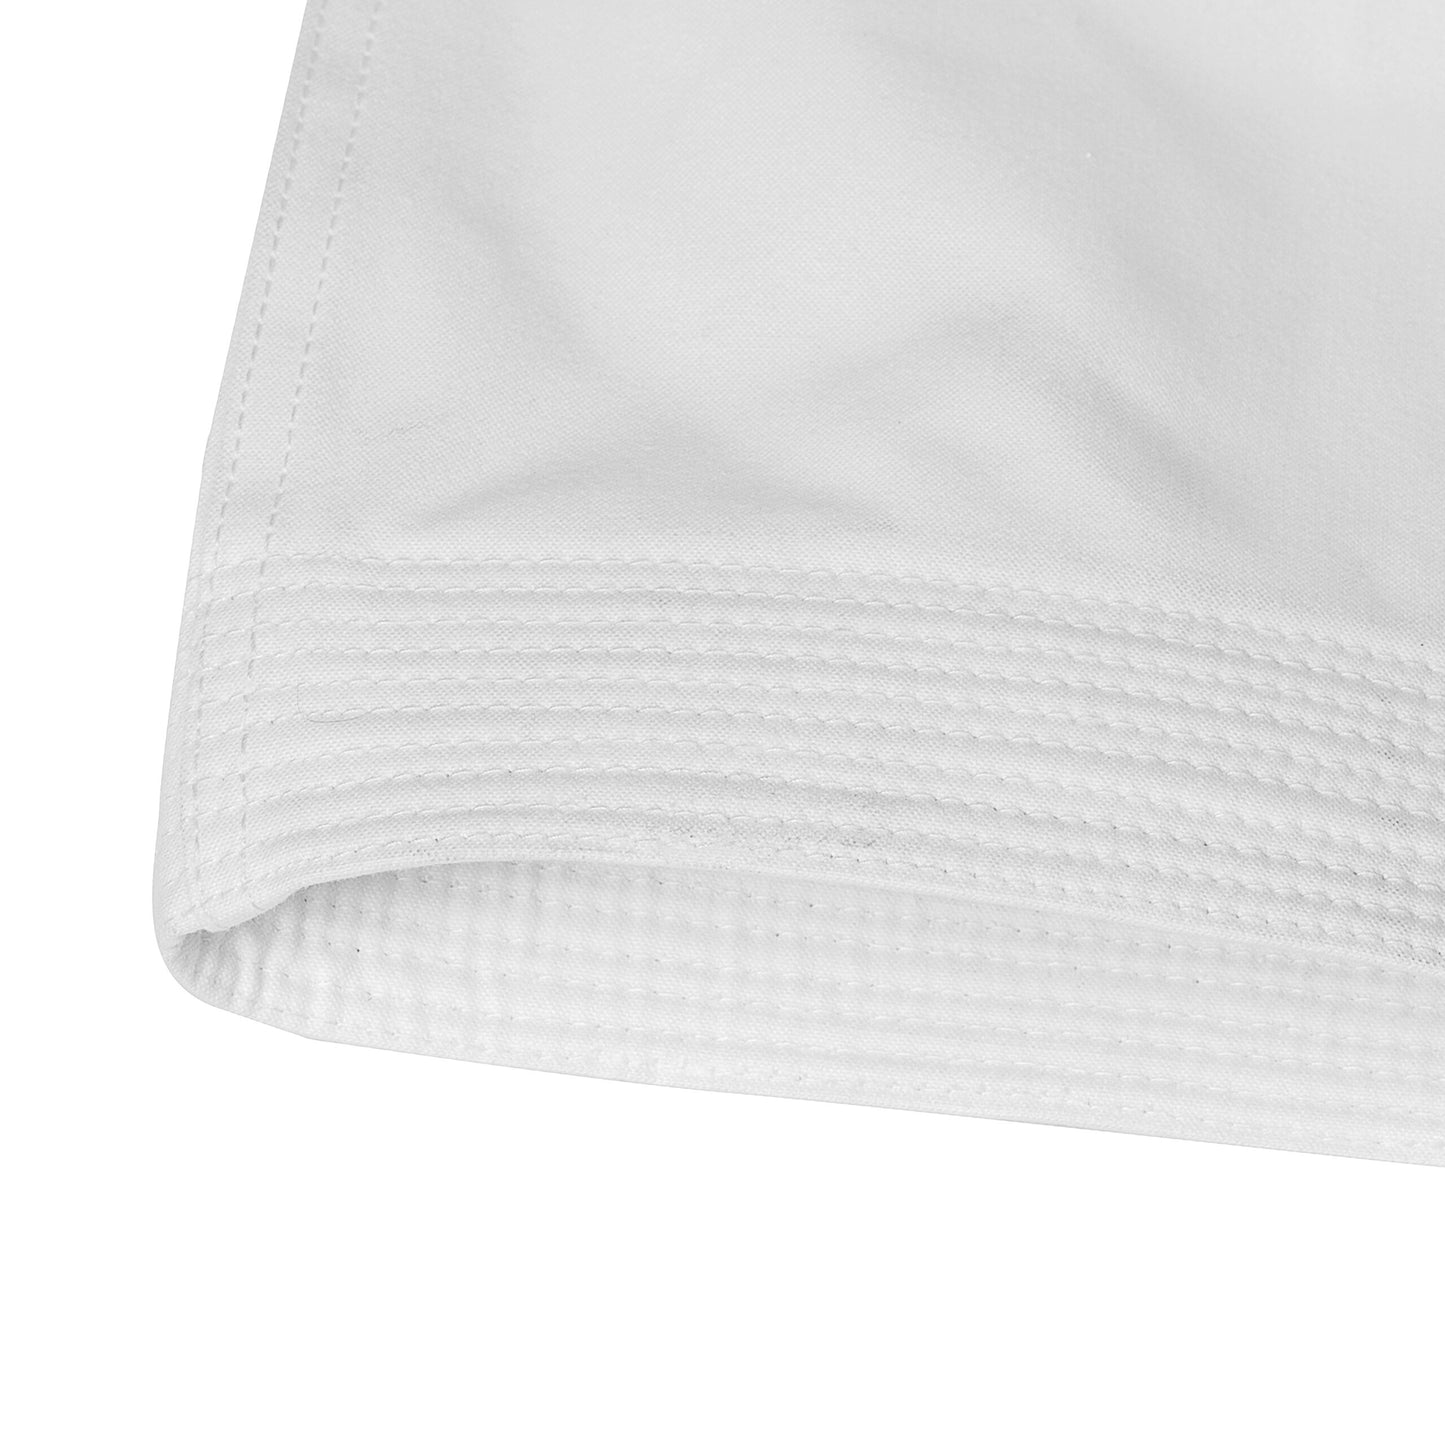 K999 Adidas Shori Kata Karate Gi Uniform White Wkf Approved 05